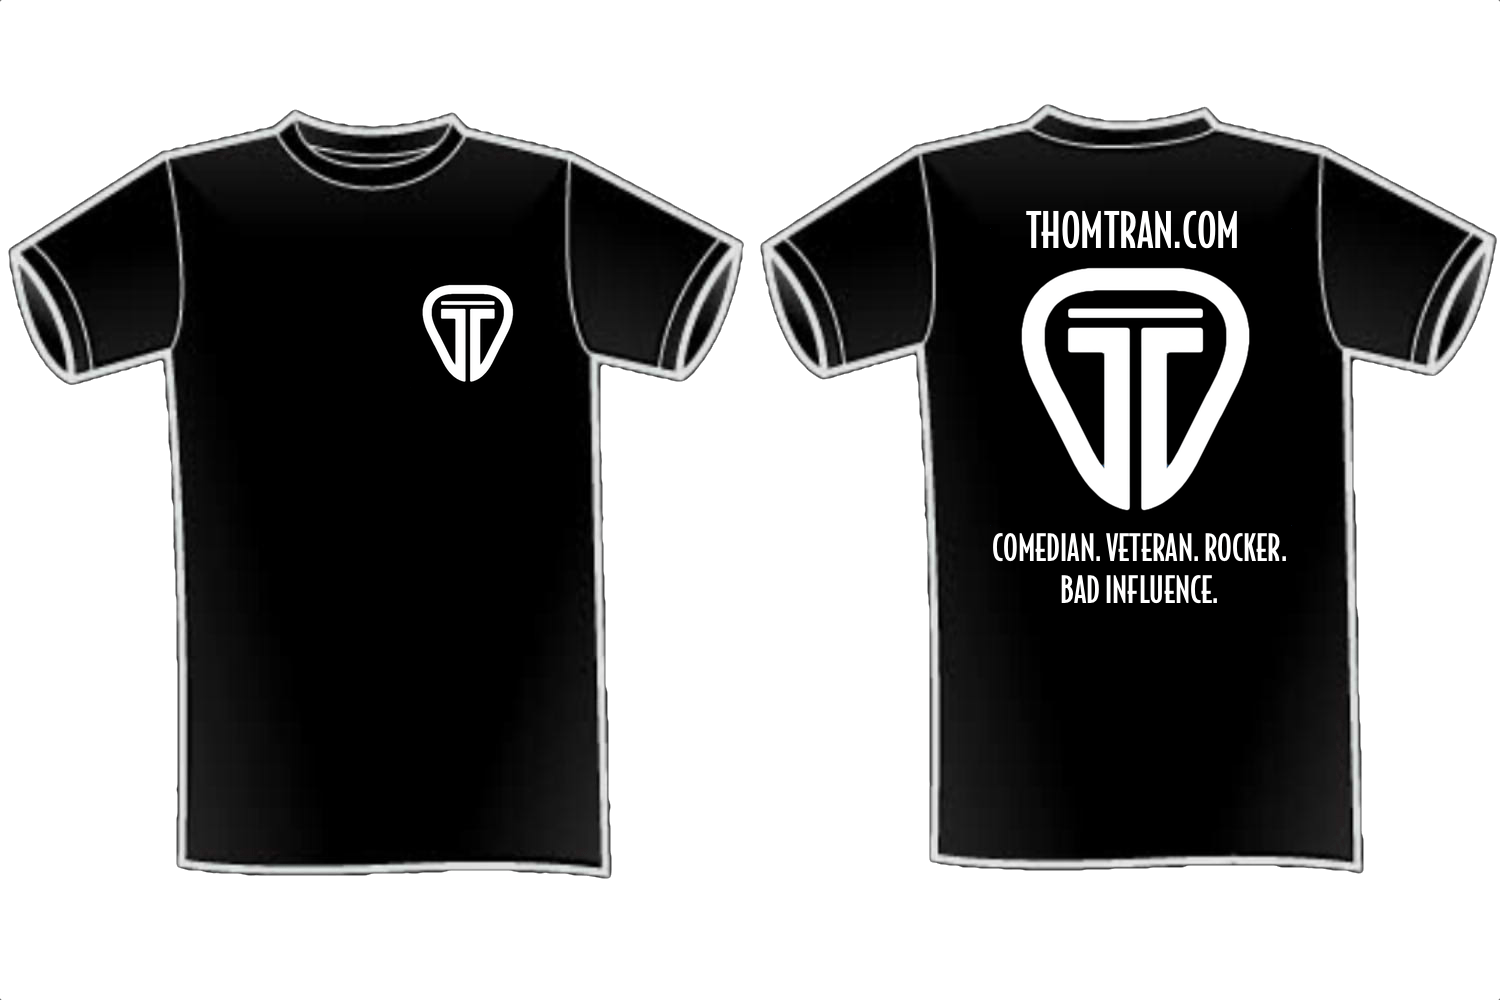 Double T Logo - DOUBLE T LOGO SHIRT | Thom Tran | Comedian - Veteran - Rocker